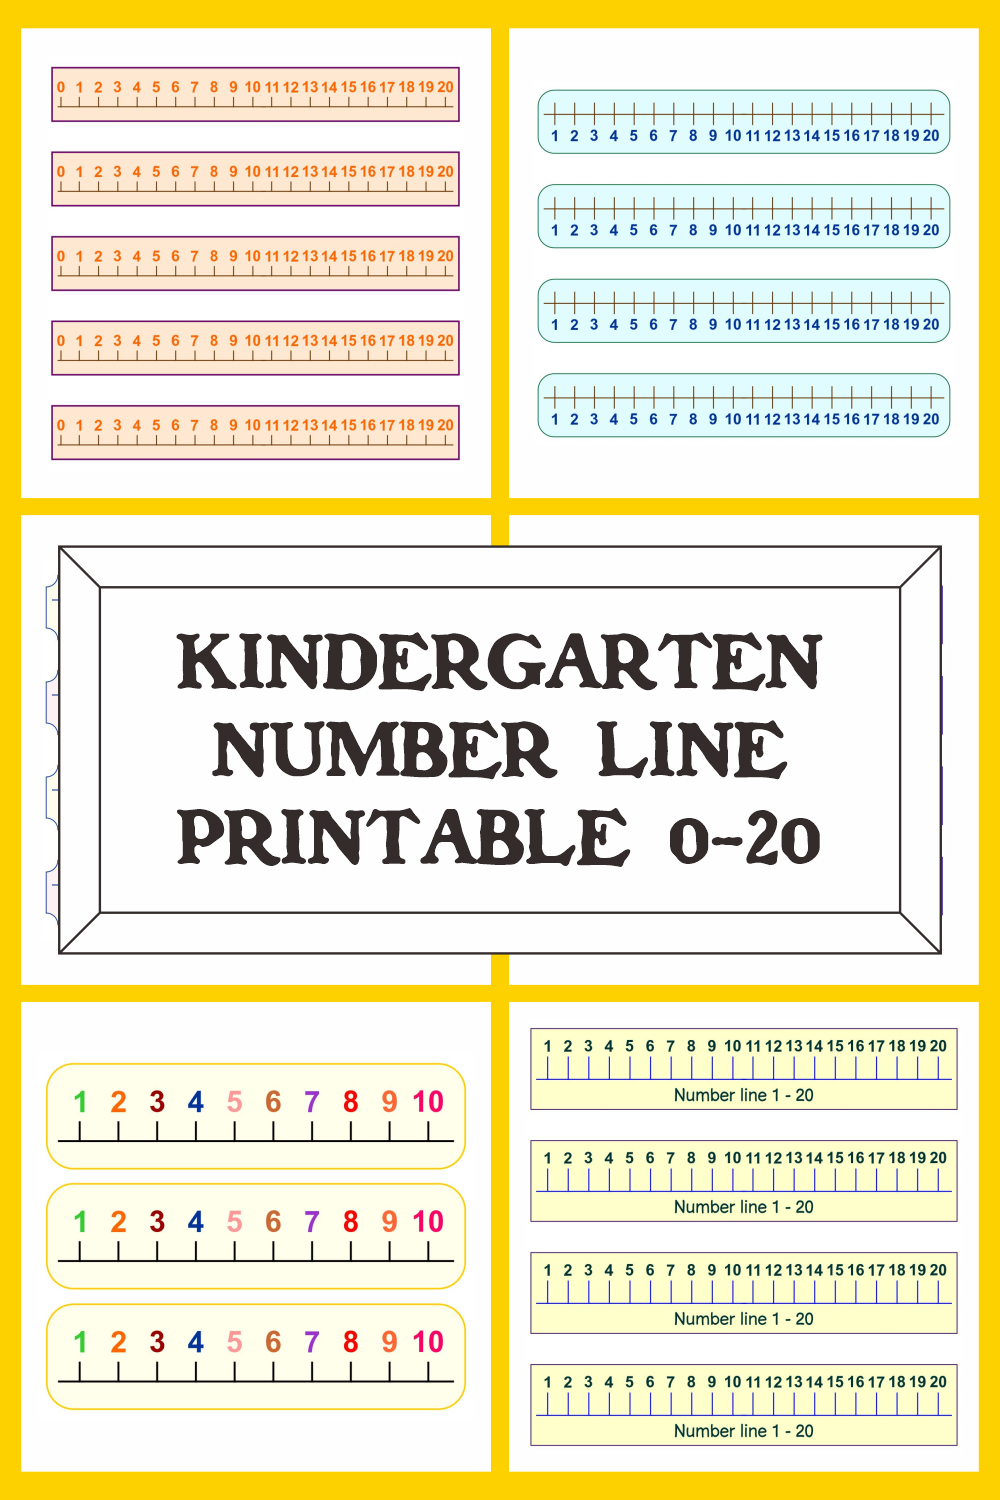 Kindergarten Number Line Printable 0-20